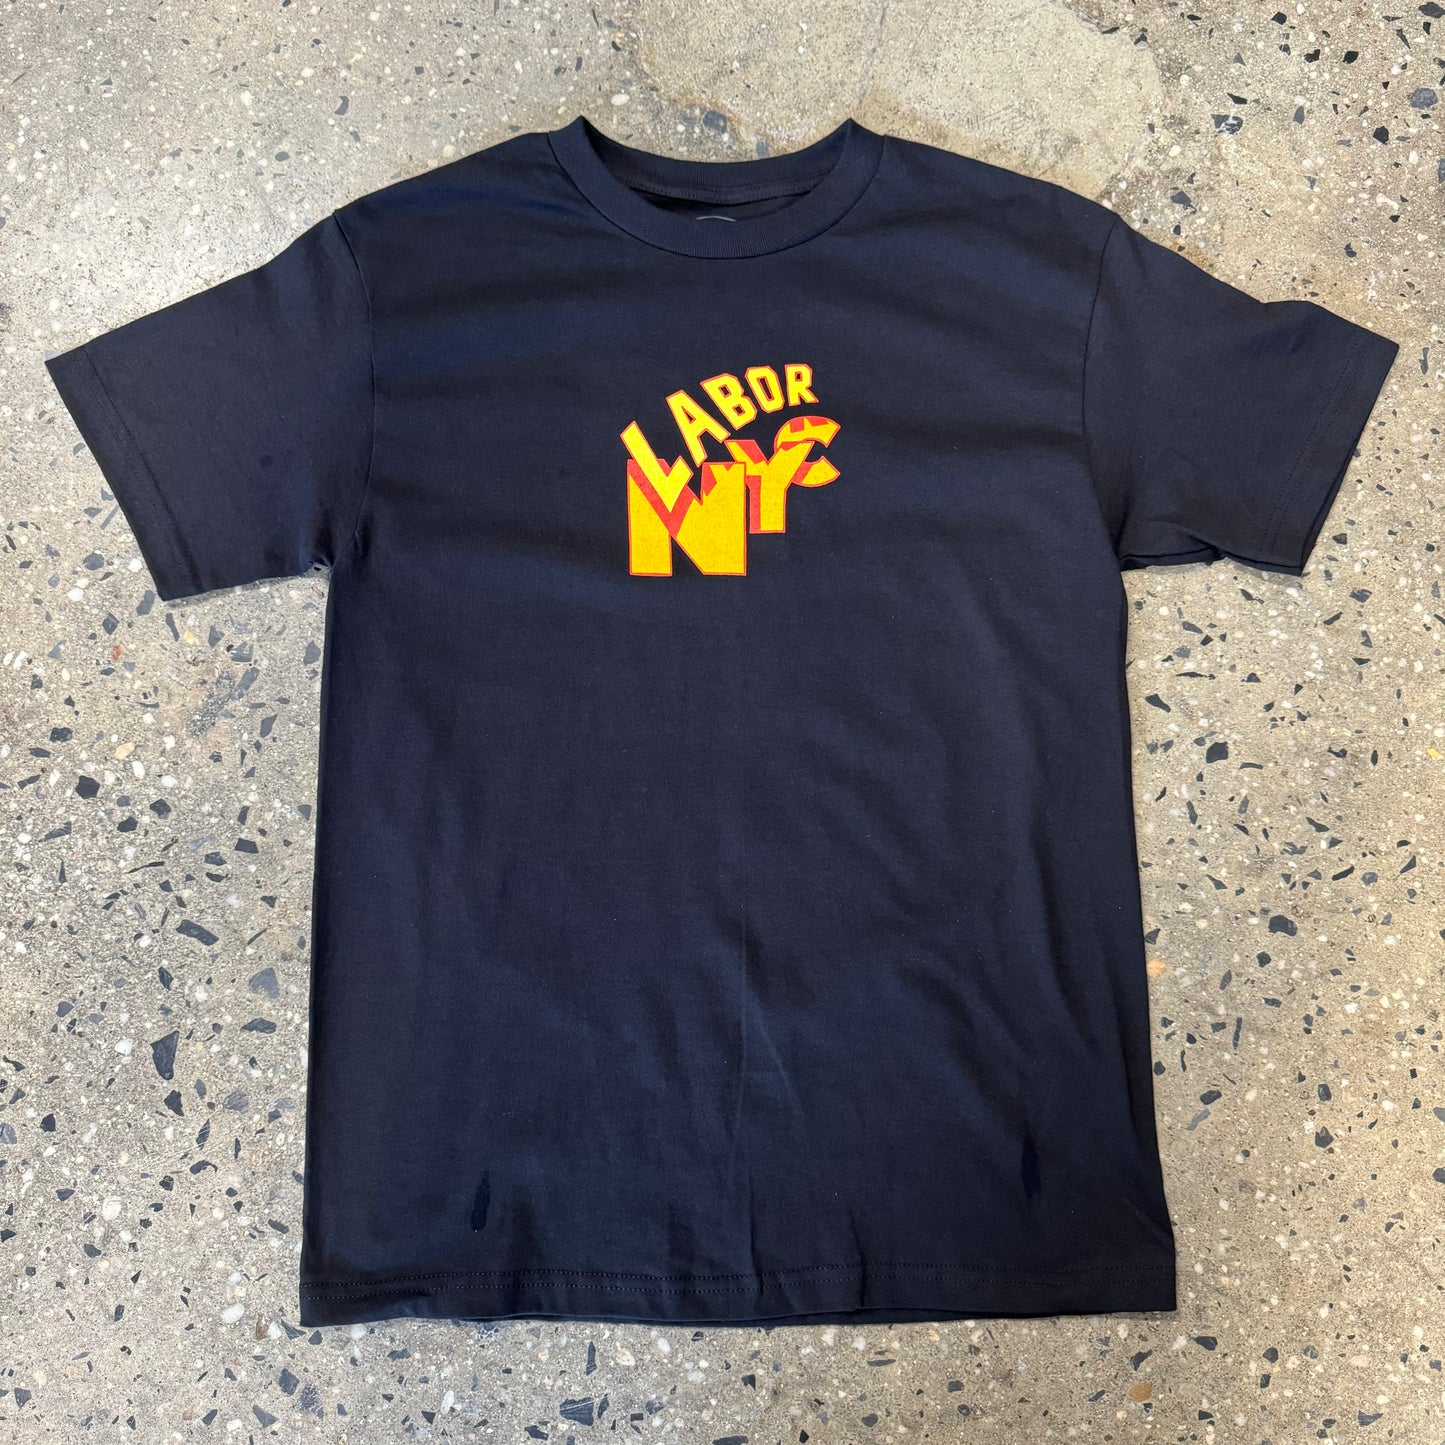 Labor NYC 3D Short Sleeve T-Shirt - Black